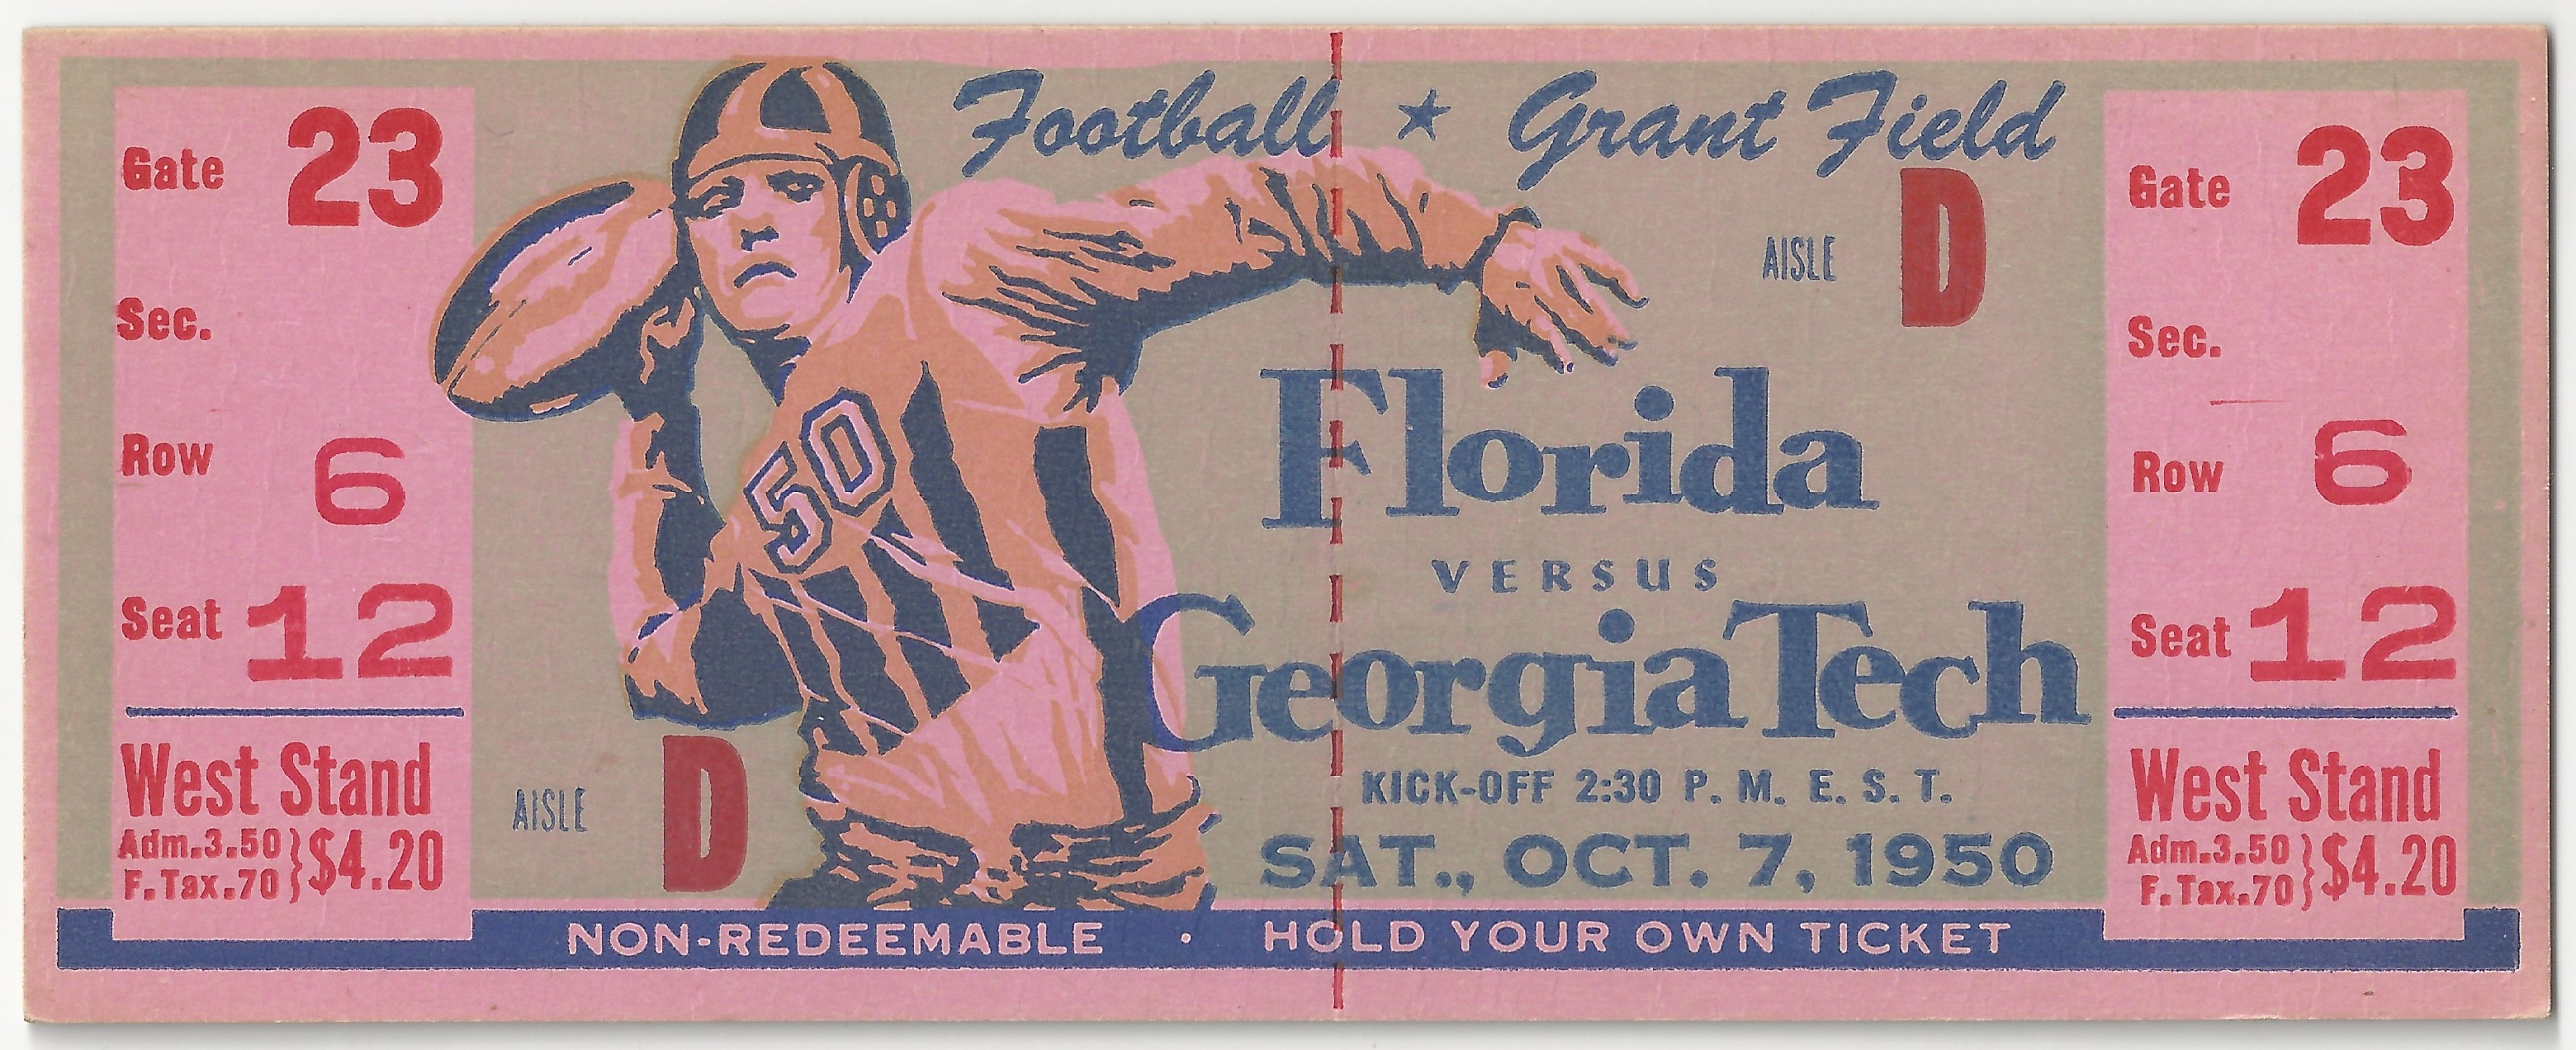 Georgia Tech vs. Florida - 1950